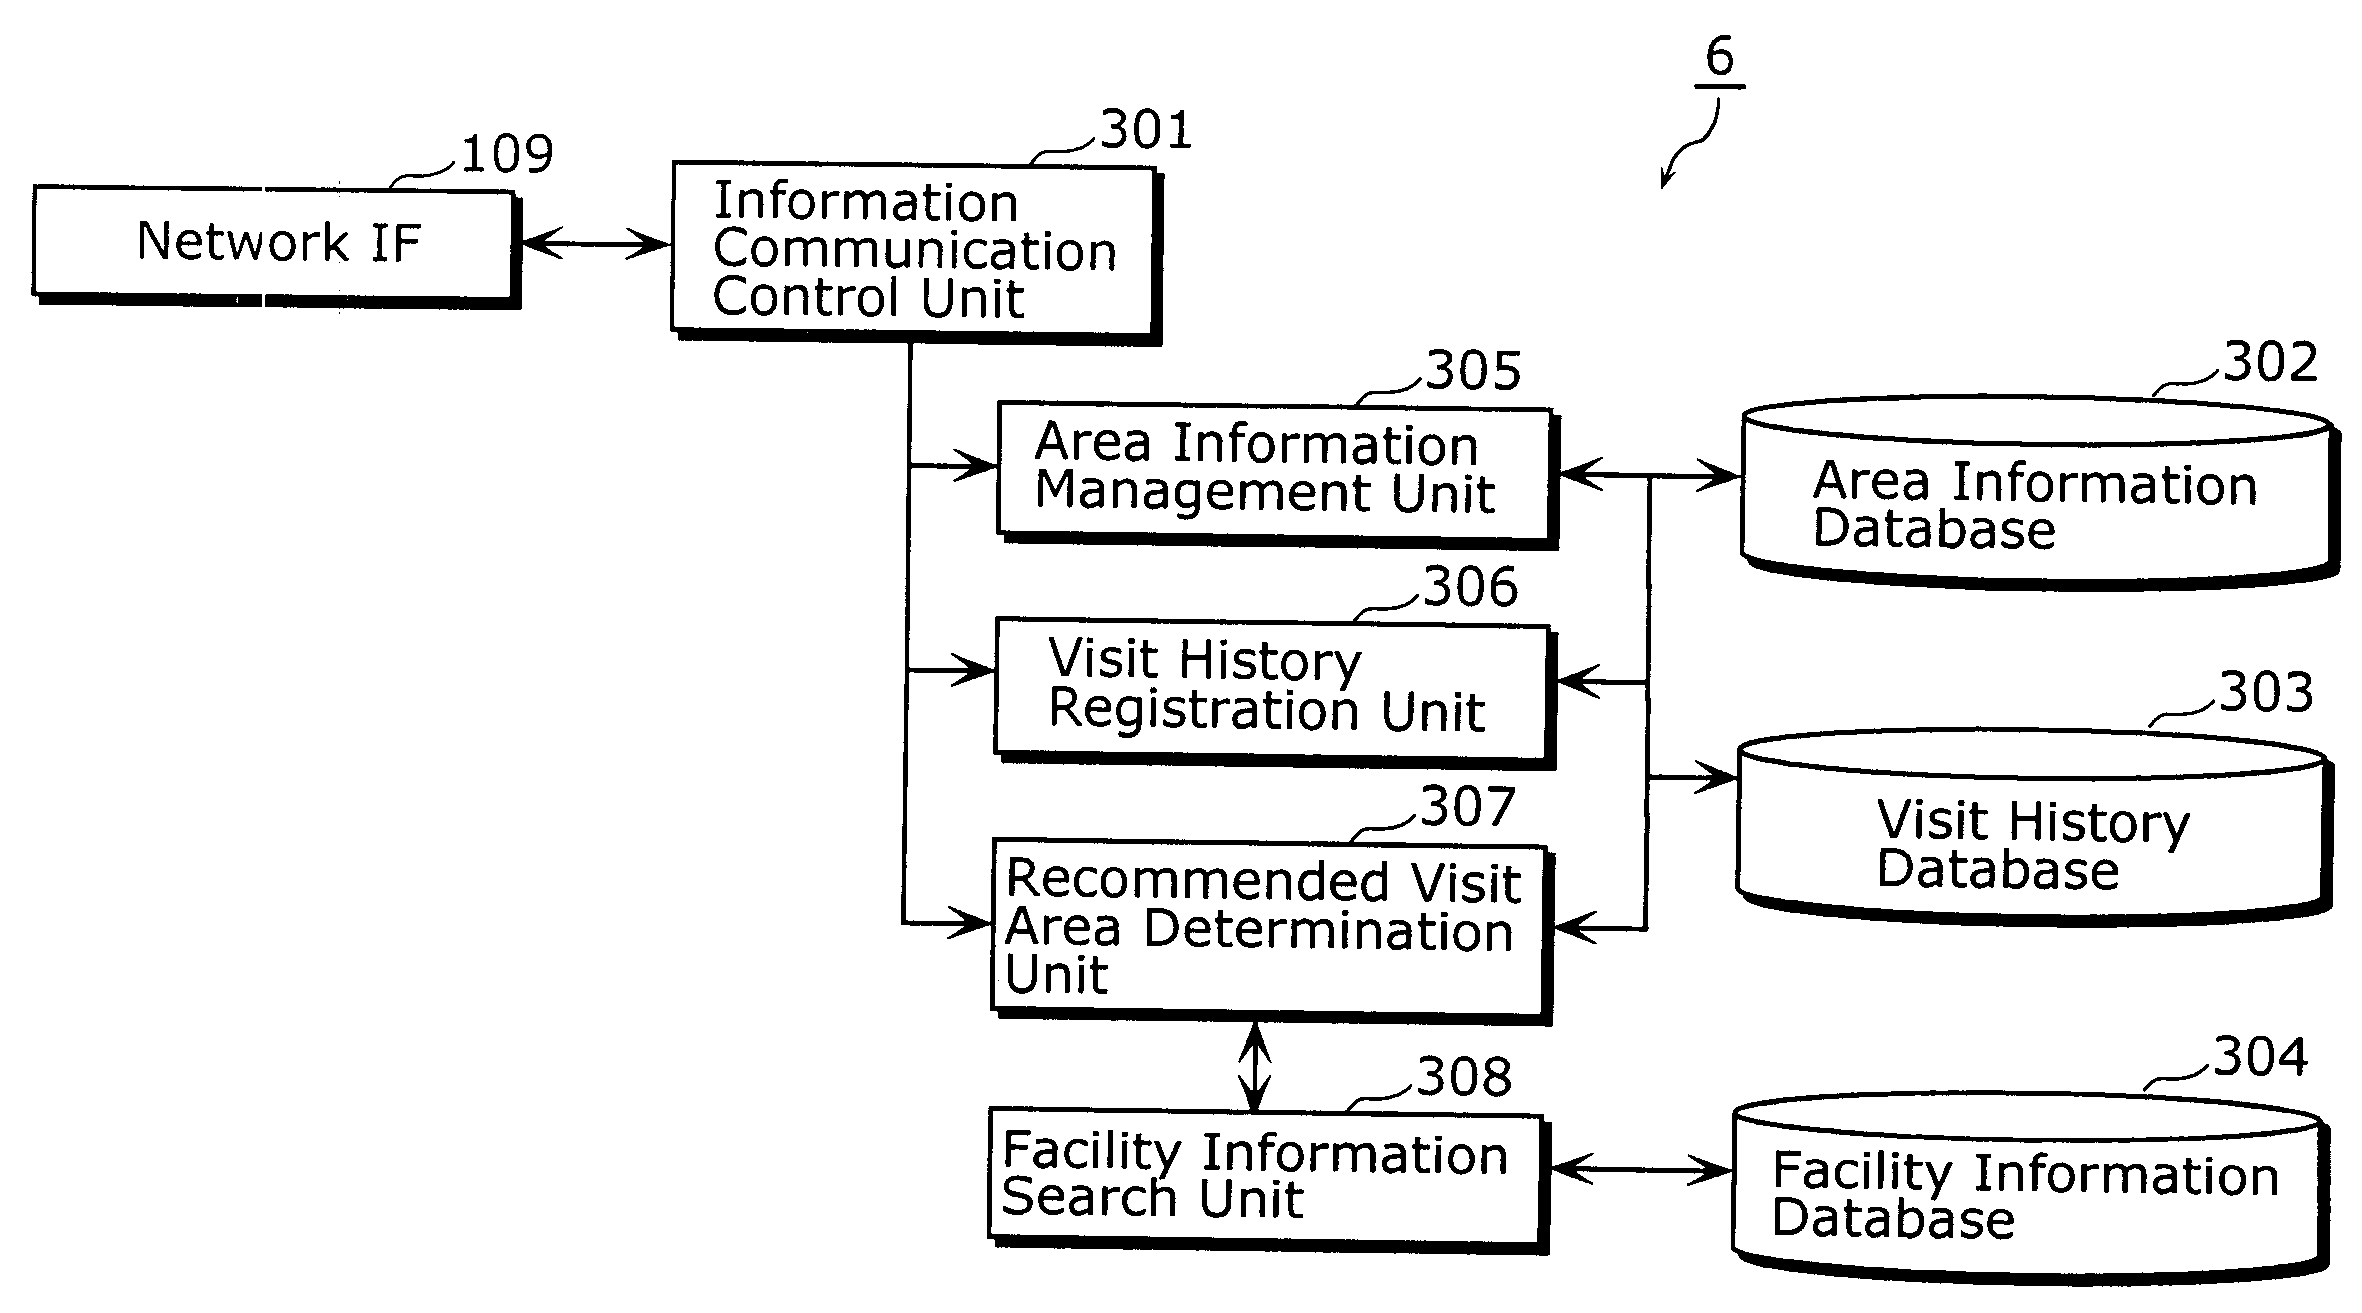 Information providing device